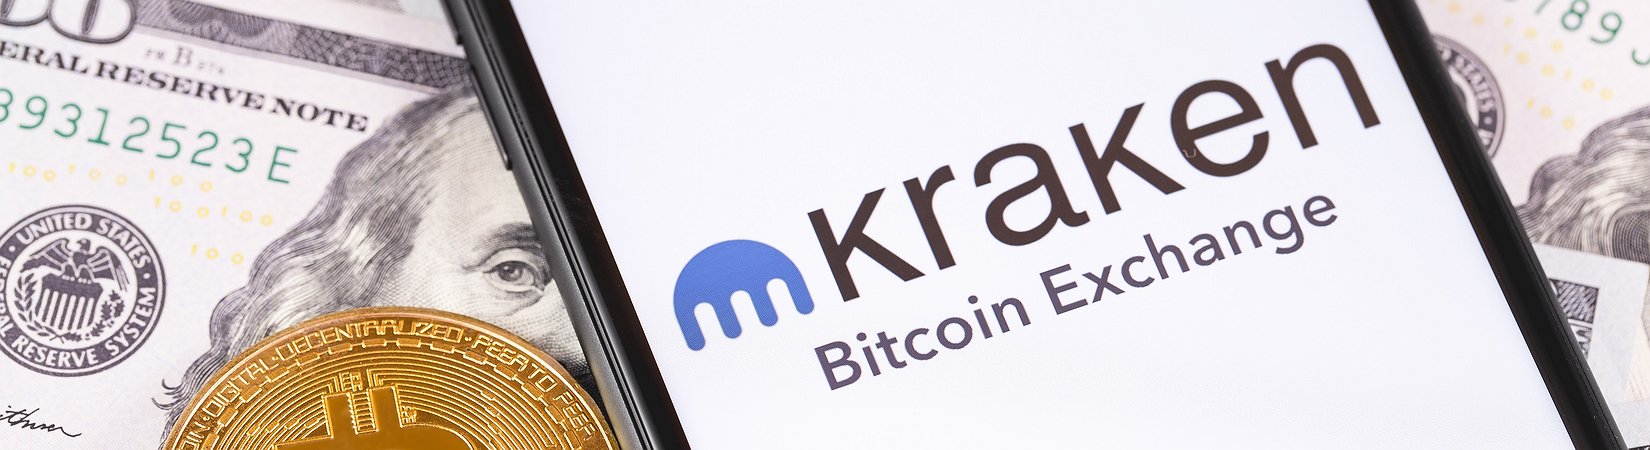 ﻿Kraken หนึ่งในตลาดแลกเปลี่ยน Bitcoin ที่เก่าแก่ที่สุด เข้าร่วมเครือข่าย Silvergate Exchange Network